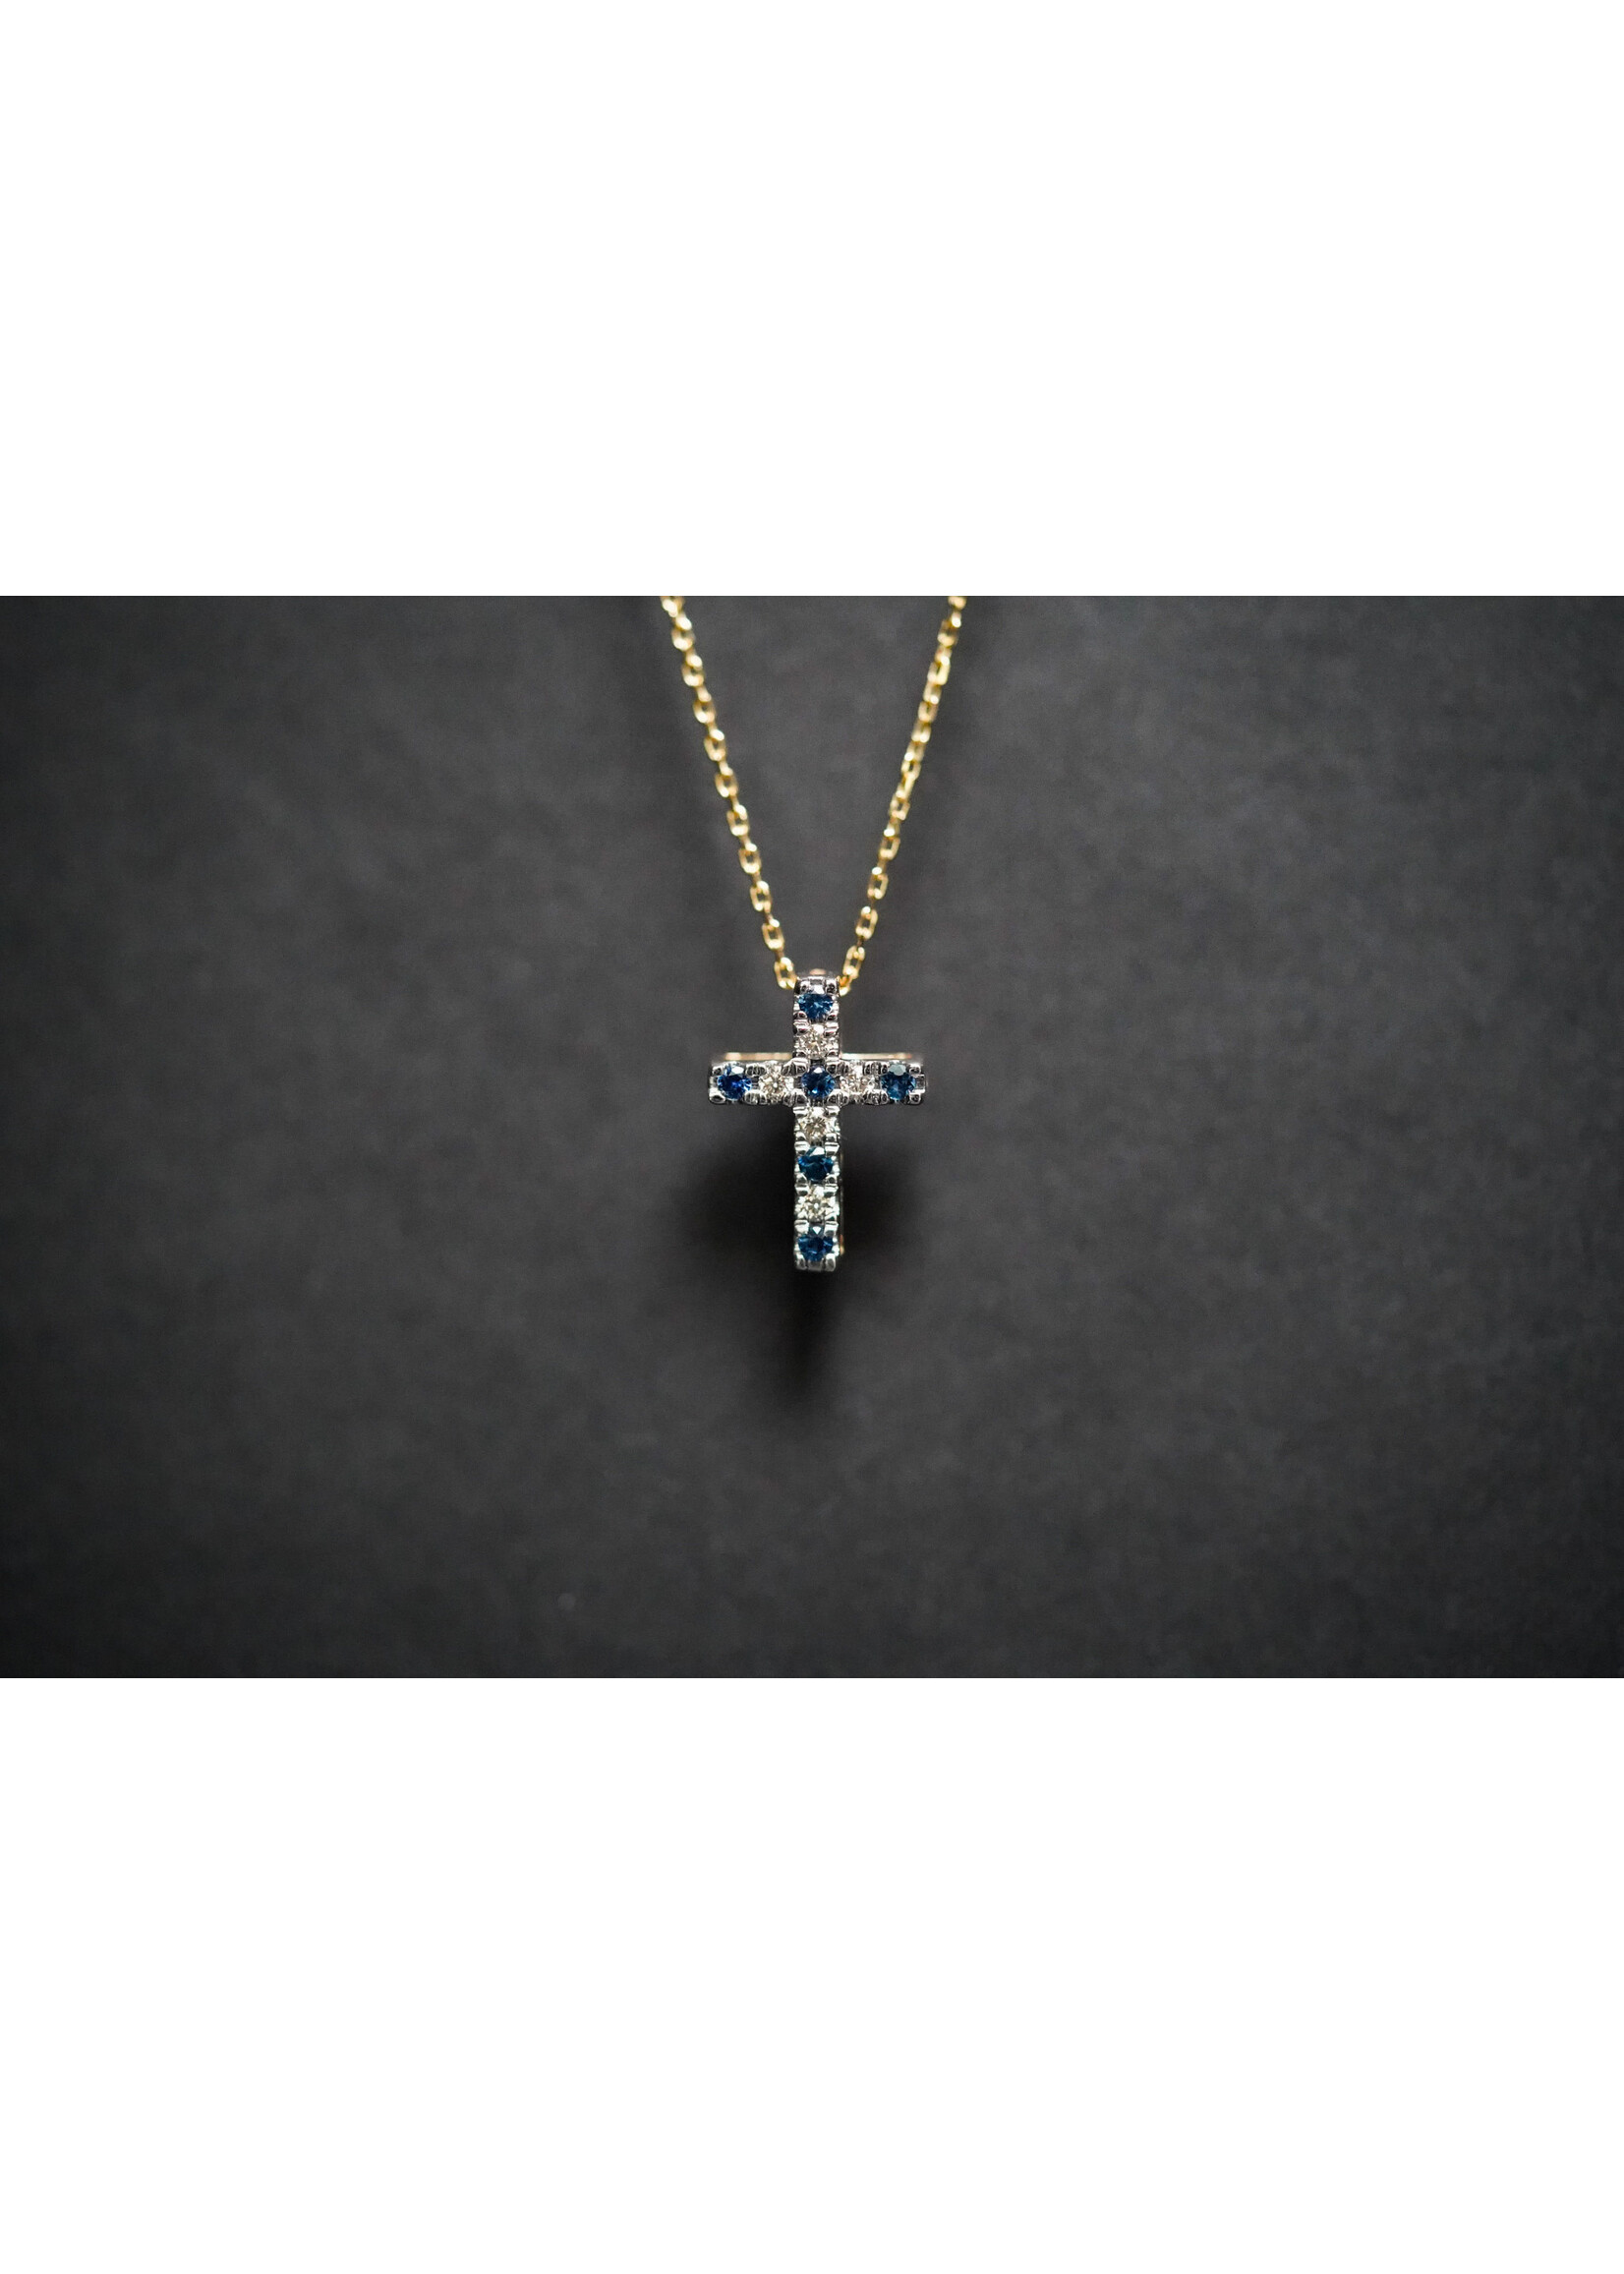 14KY 1.8g .18ctw Sapphire & Diamond Cross Necklace 16-18"